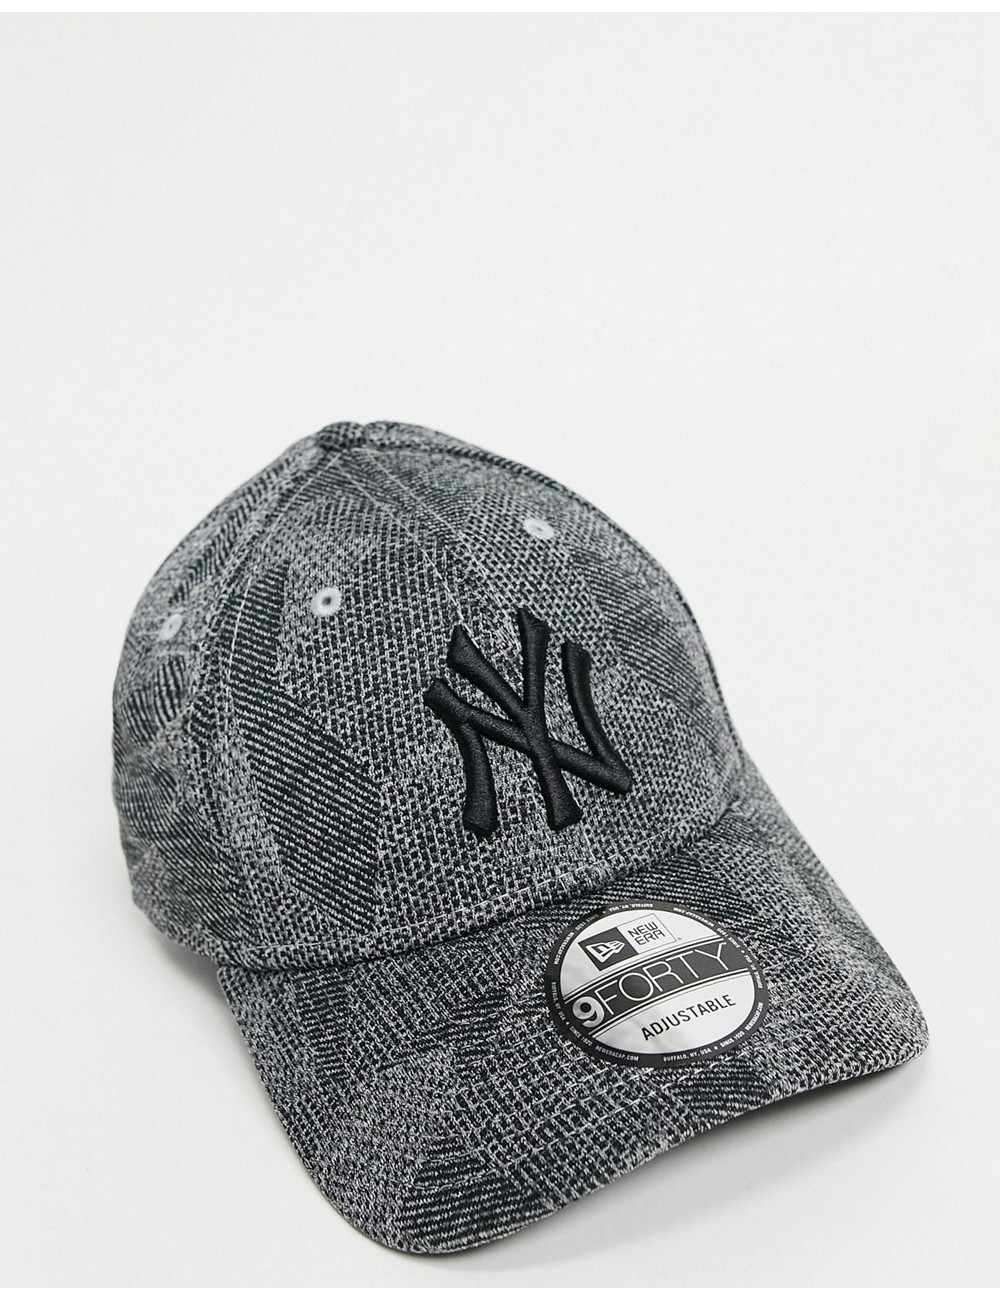 New Era 9forty cap in grey